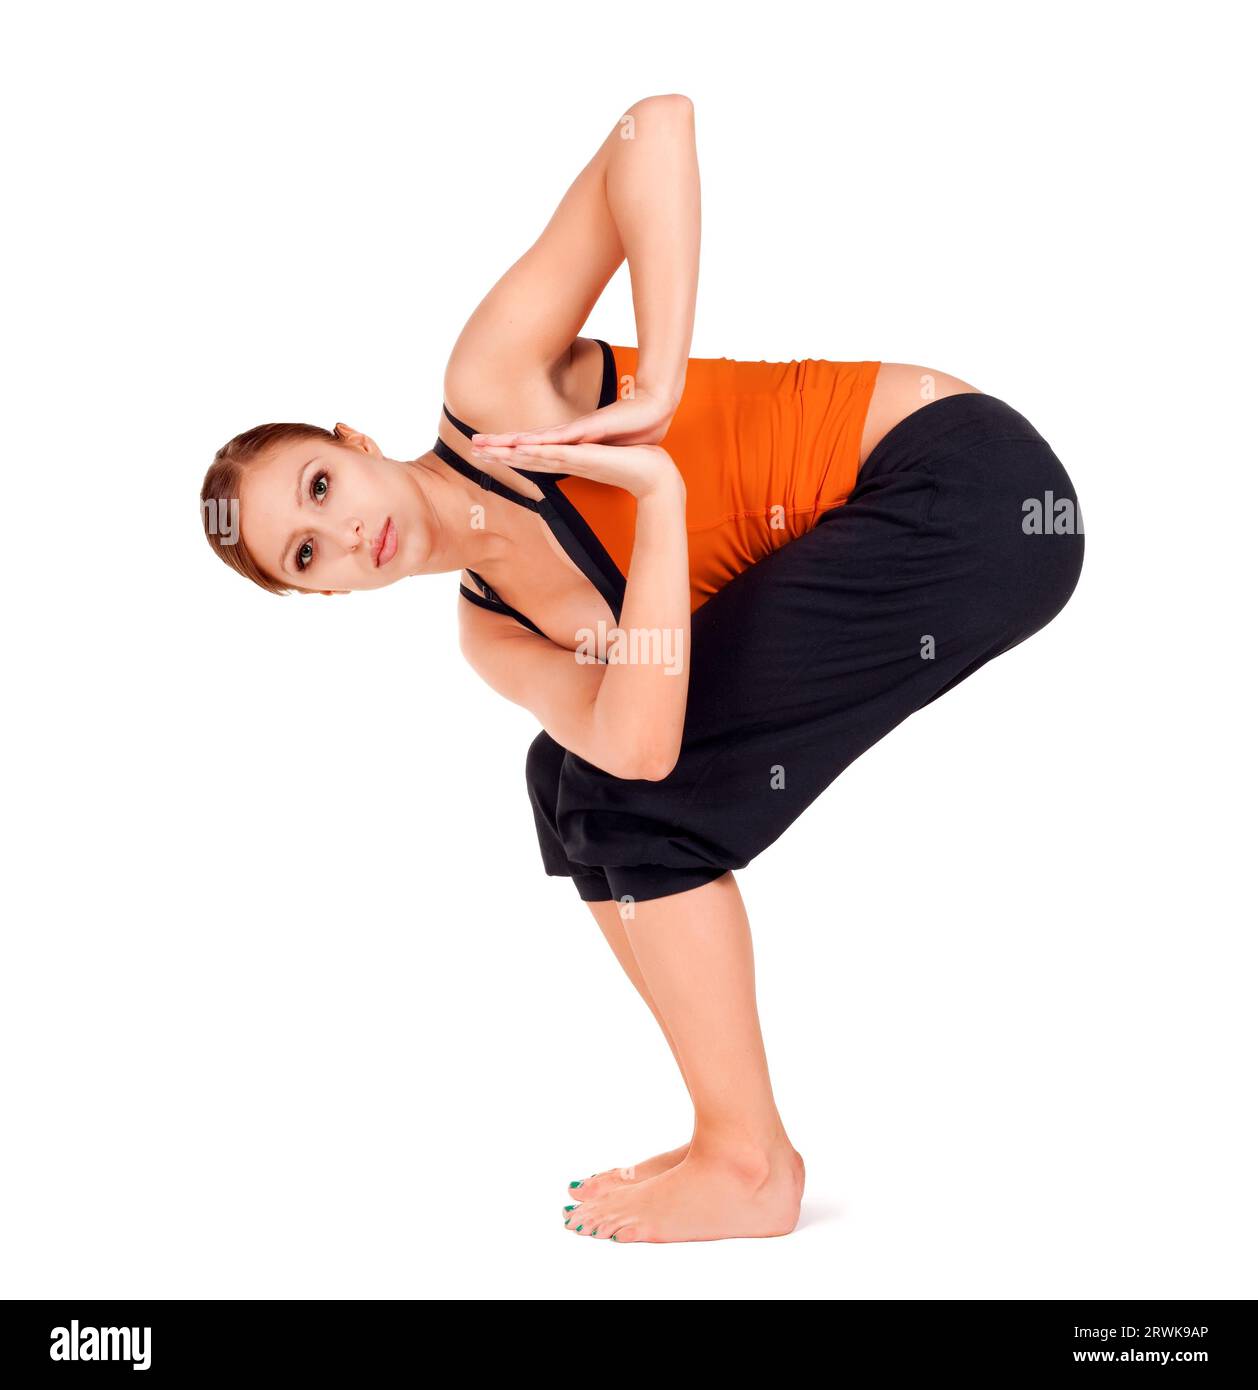 Learn about Halasana Yoga Asana | Renuka Yoga Studio Gurgaon posted on the  topic | LinkedIn